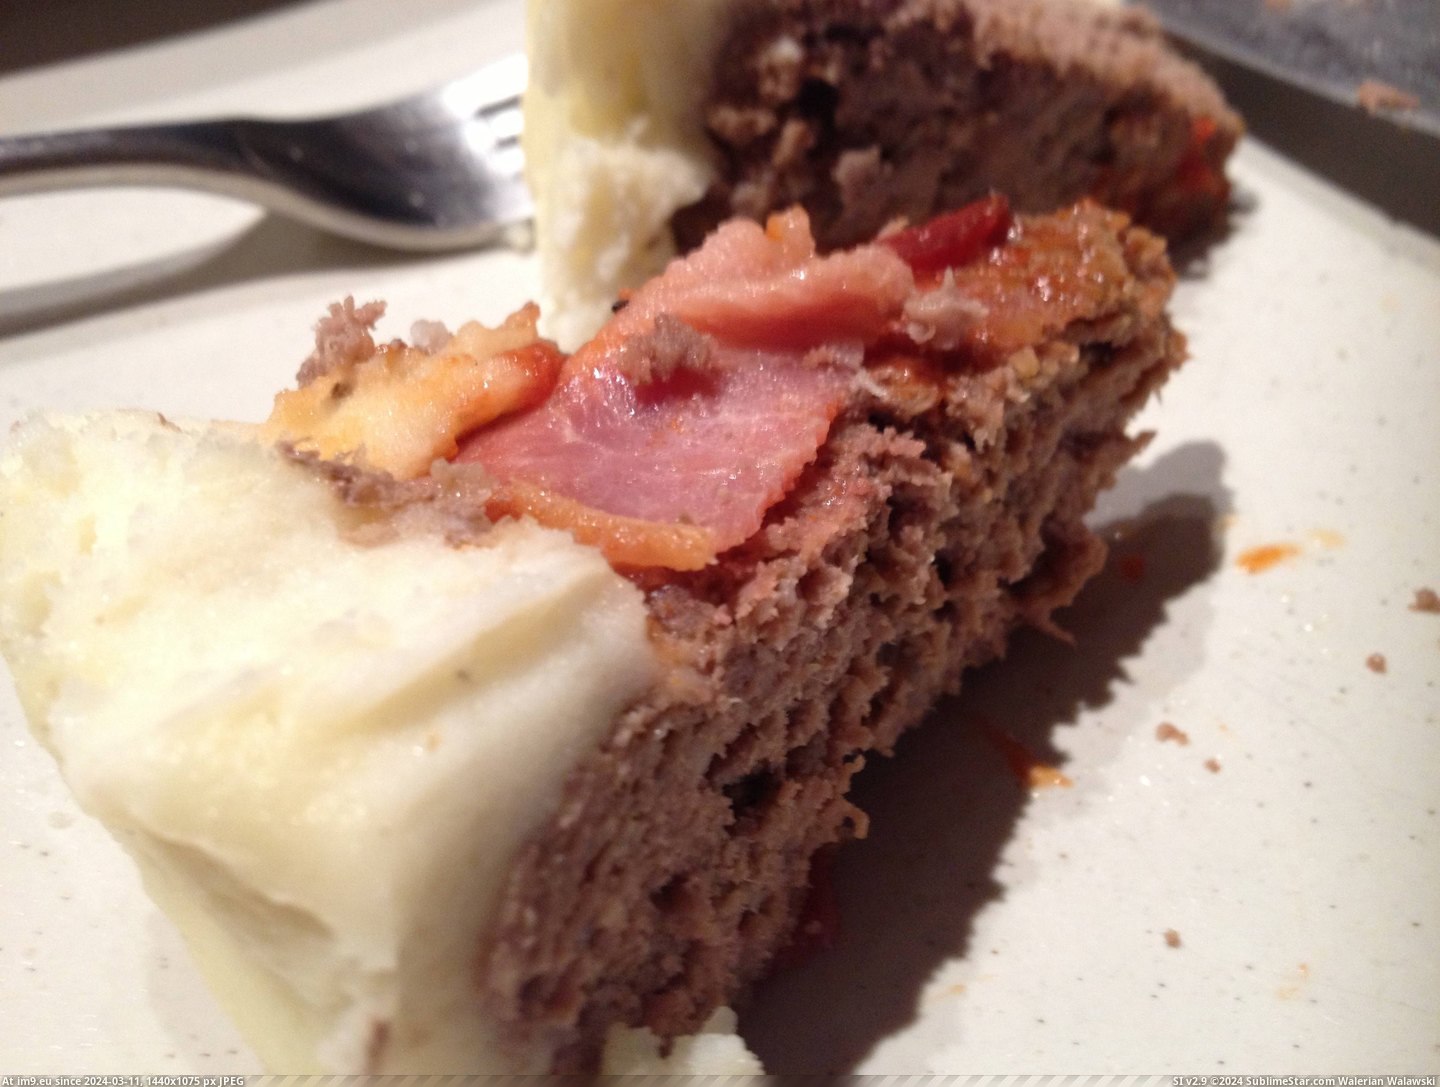  #Meatcake  [Pics] Meatcake 14 Pic. (Image of album My r/PICS favs))